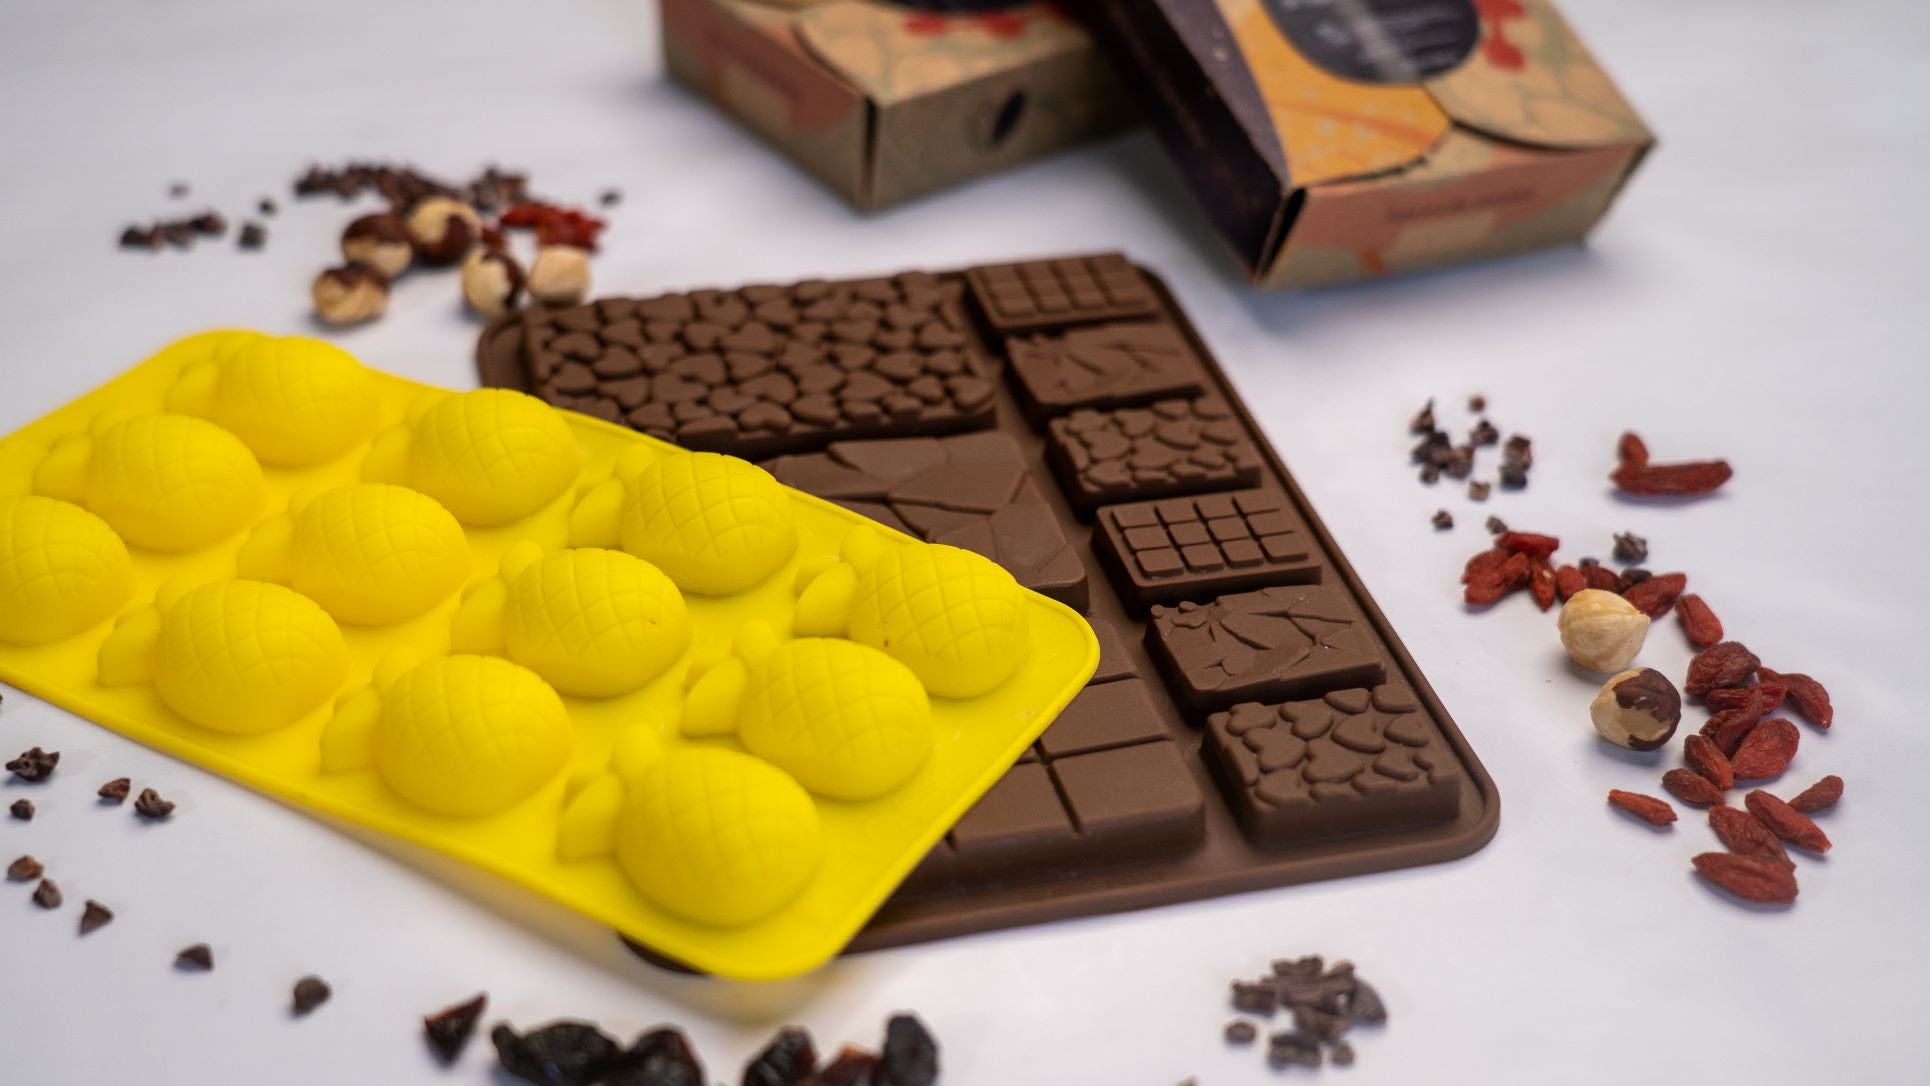 Home Chocolate Making Kit